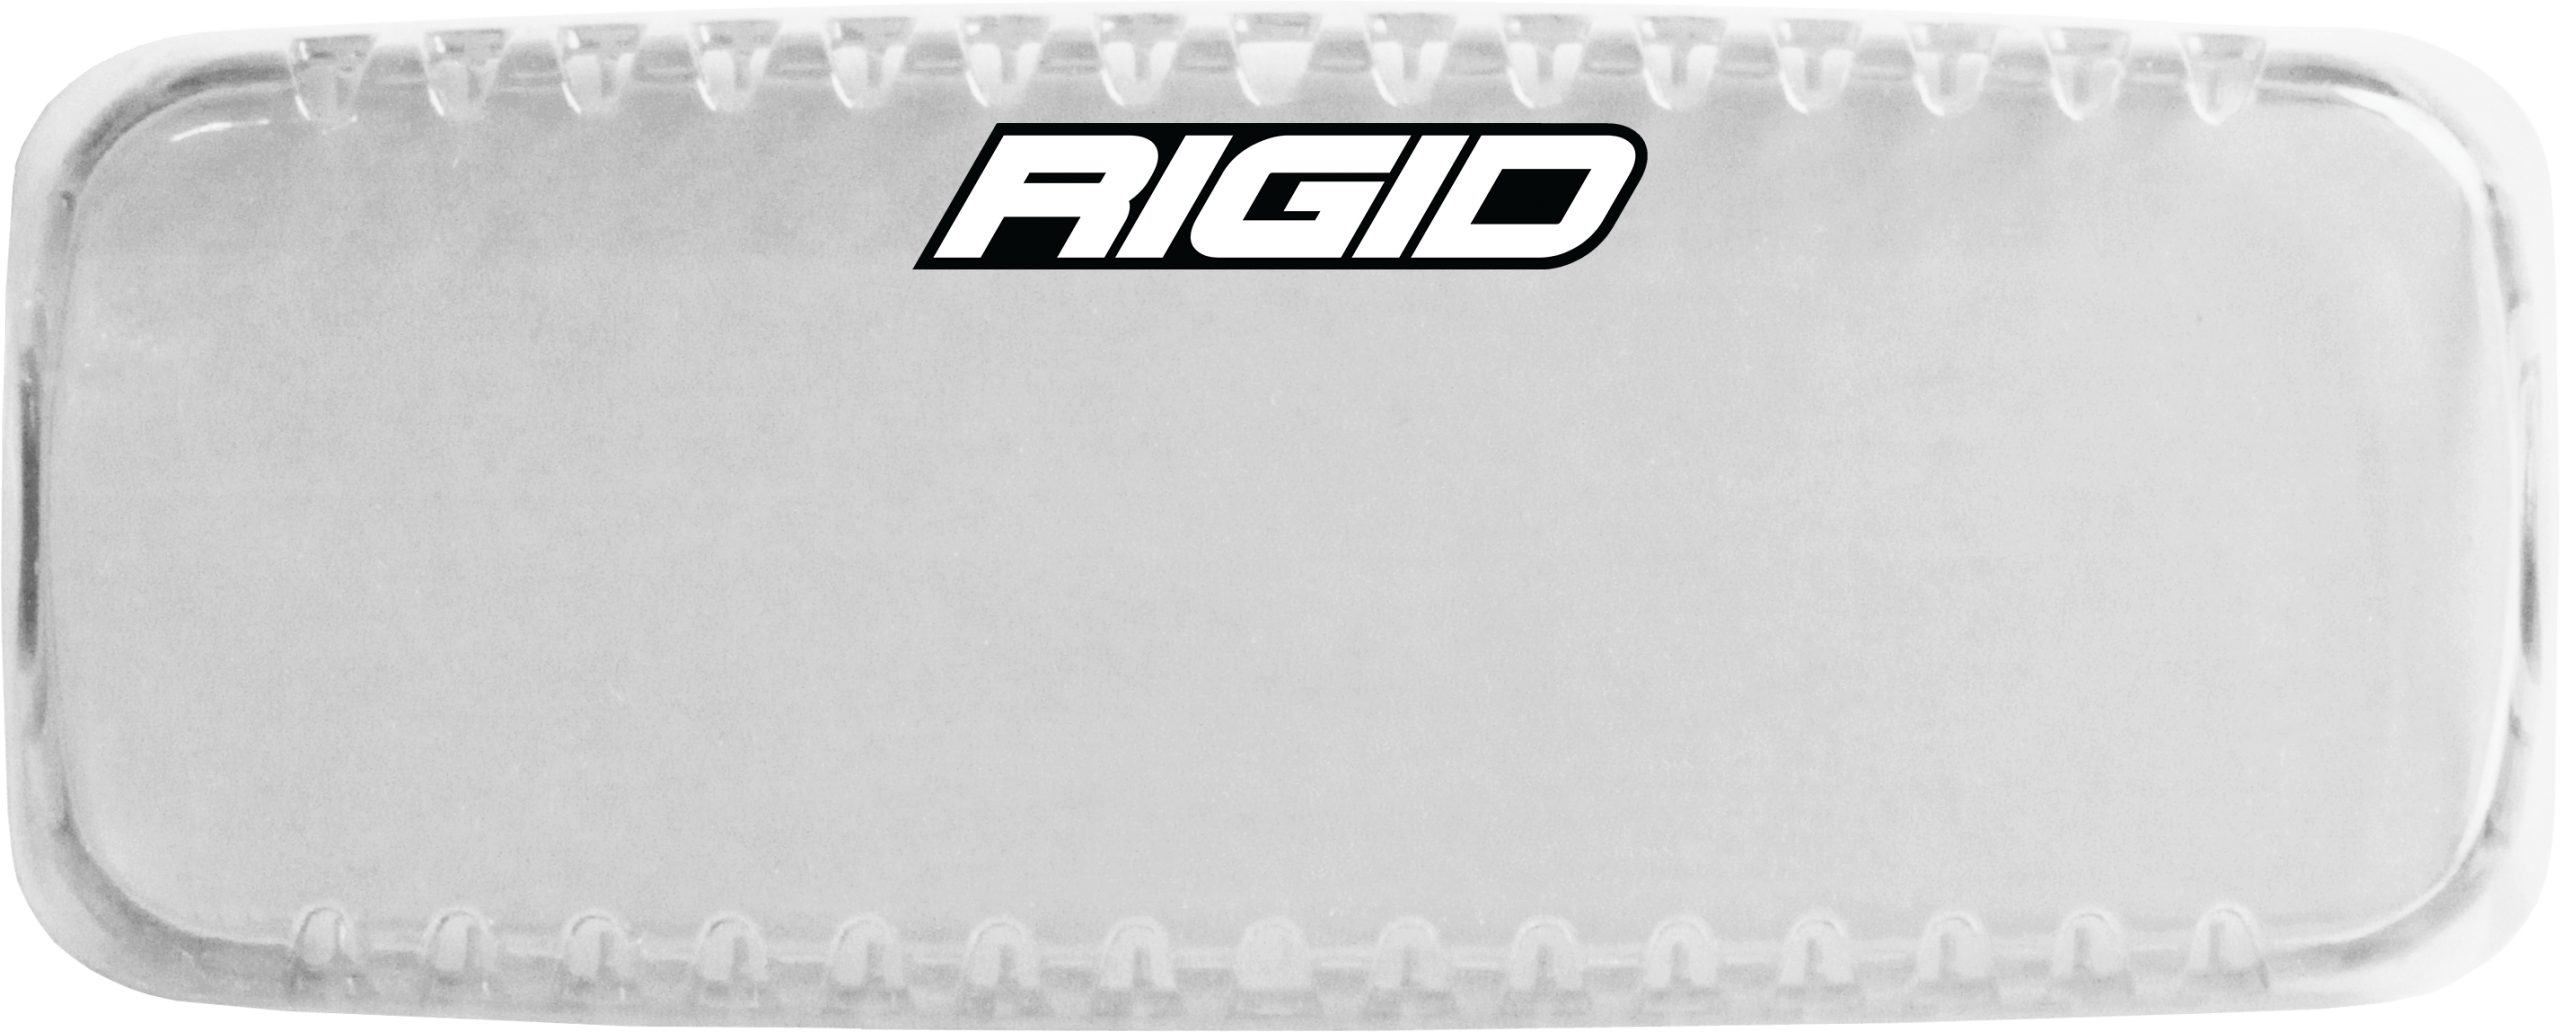 RIGID Industries 311923 SR-Q-Series Light Cover Clear